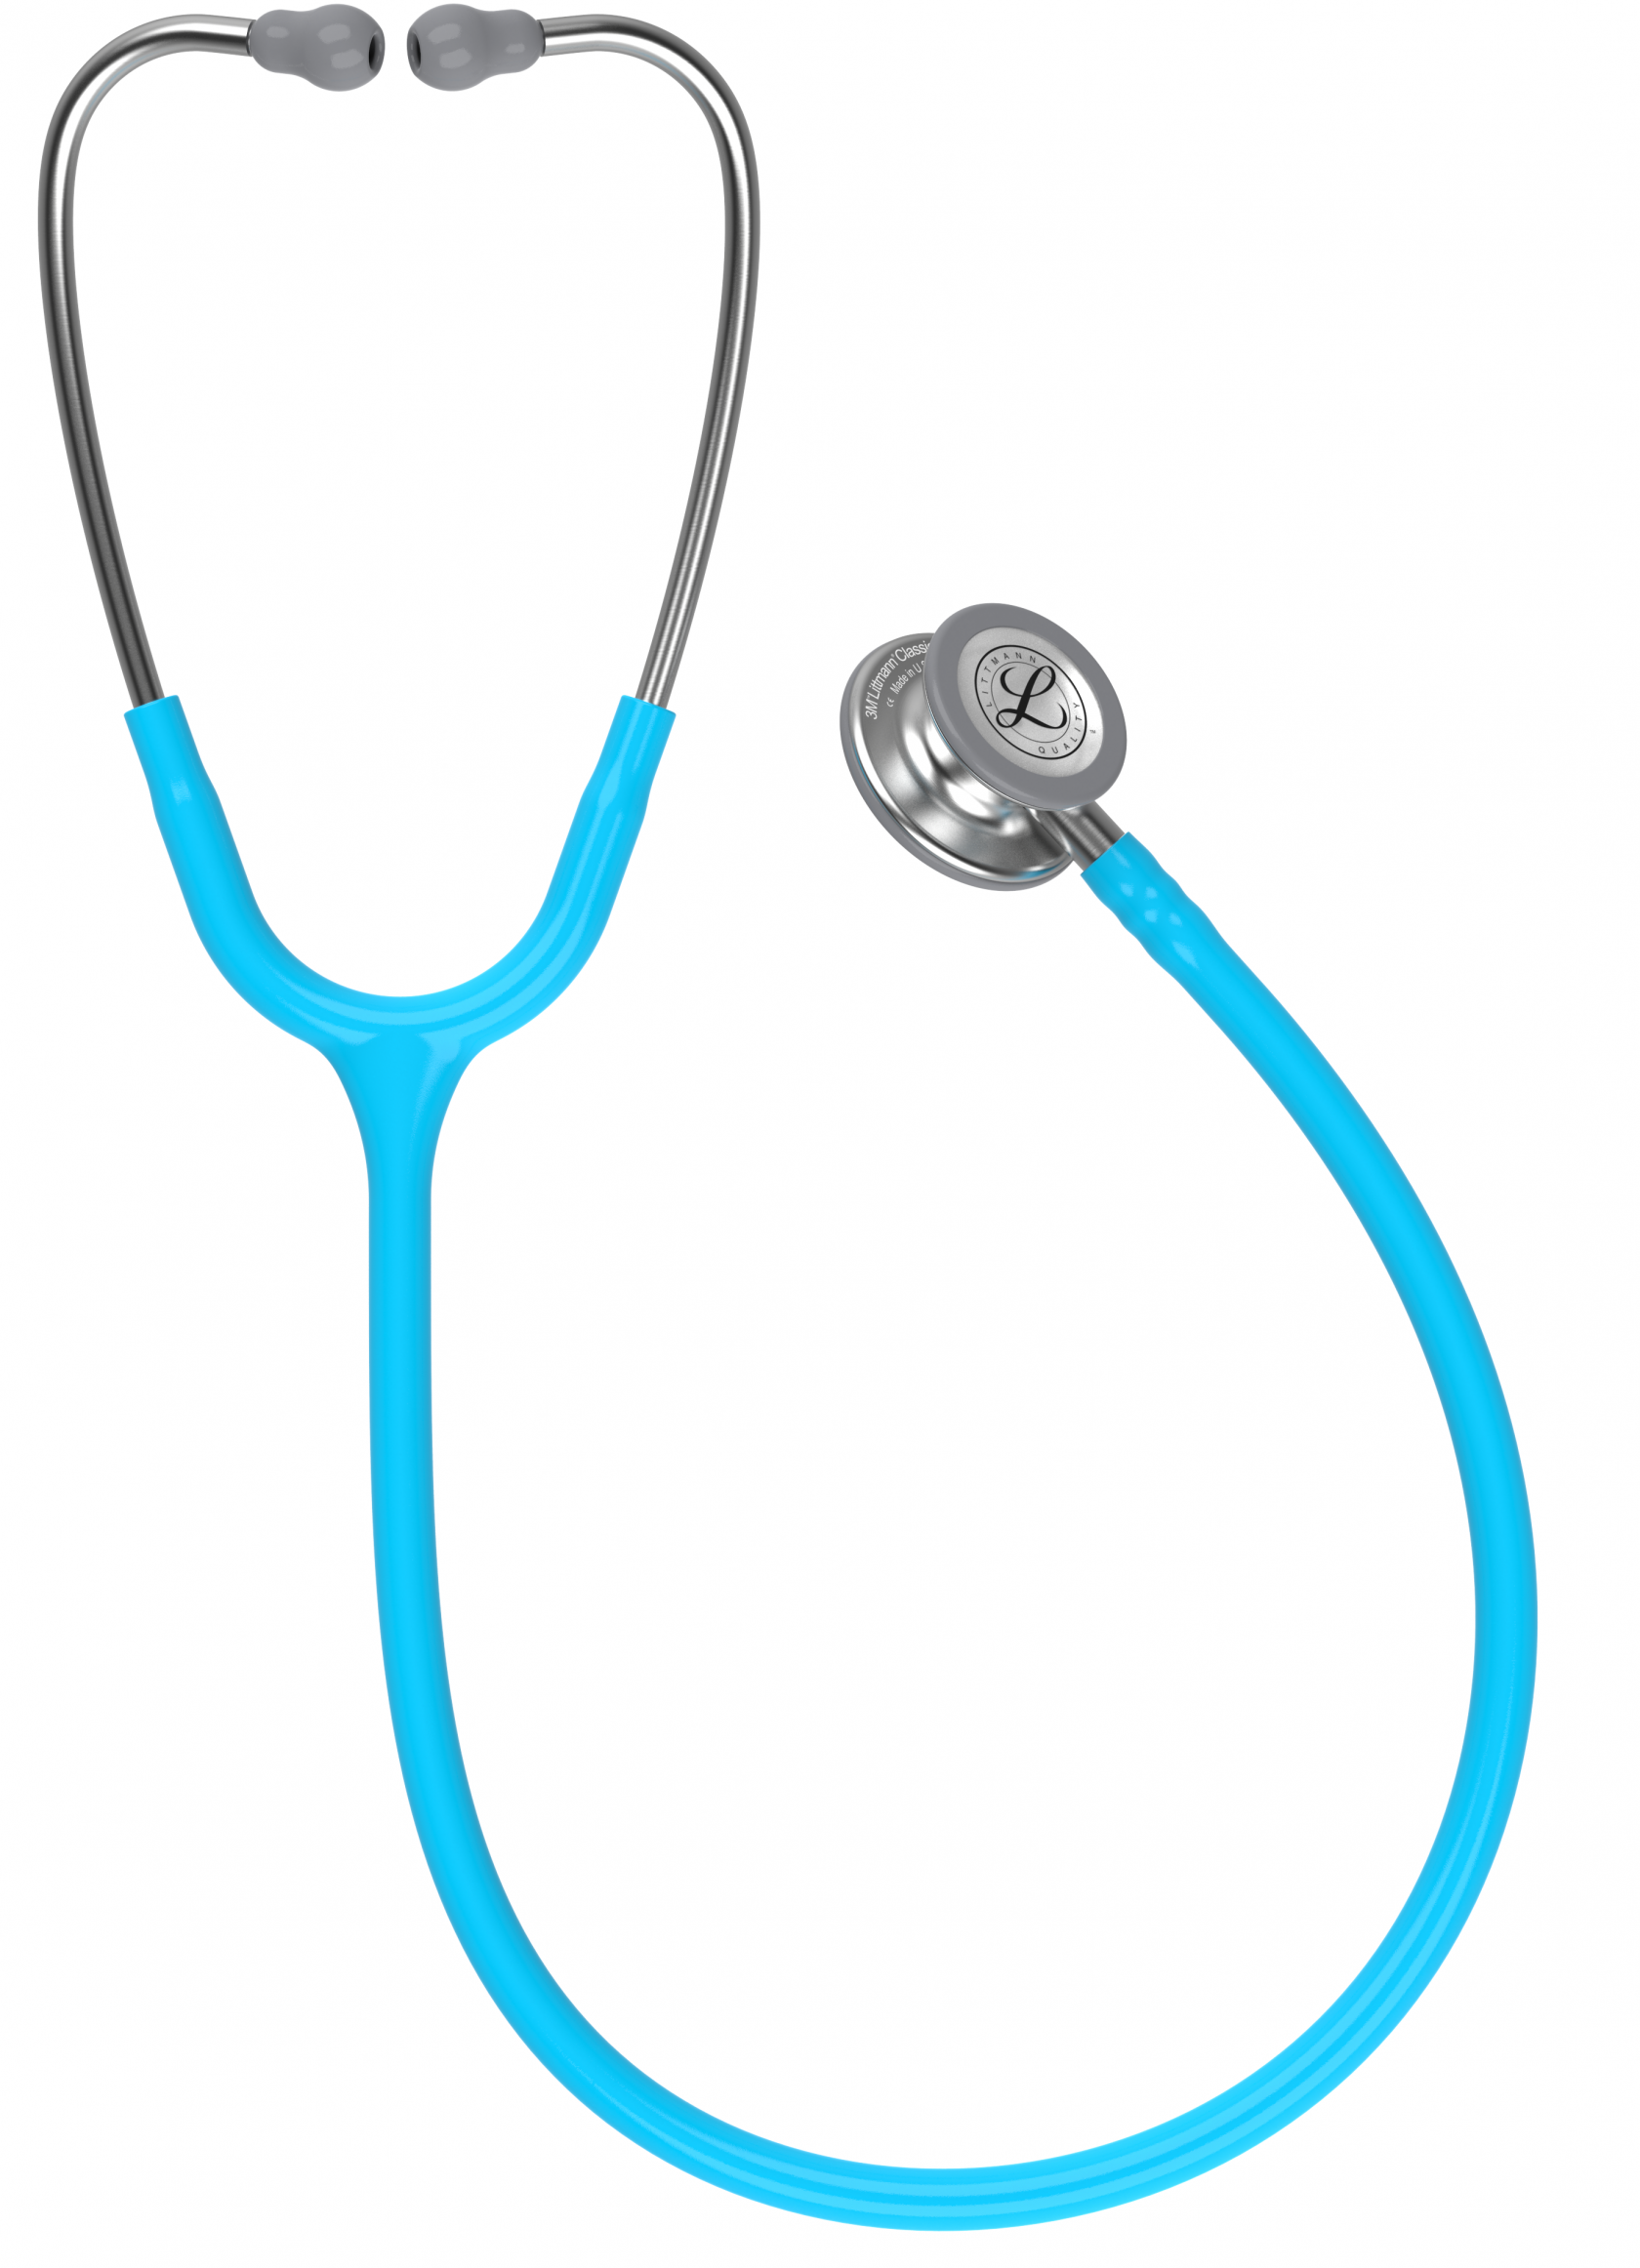 3M Stethoscope Littmann Classic III Turquoise image 0